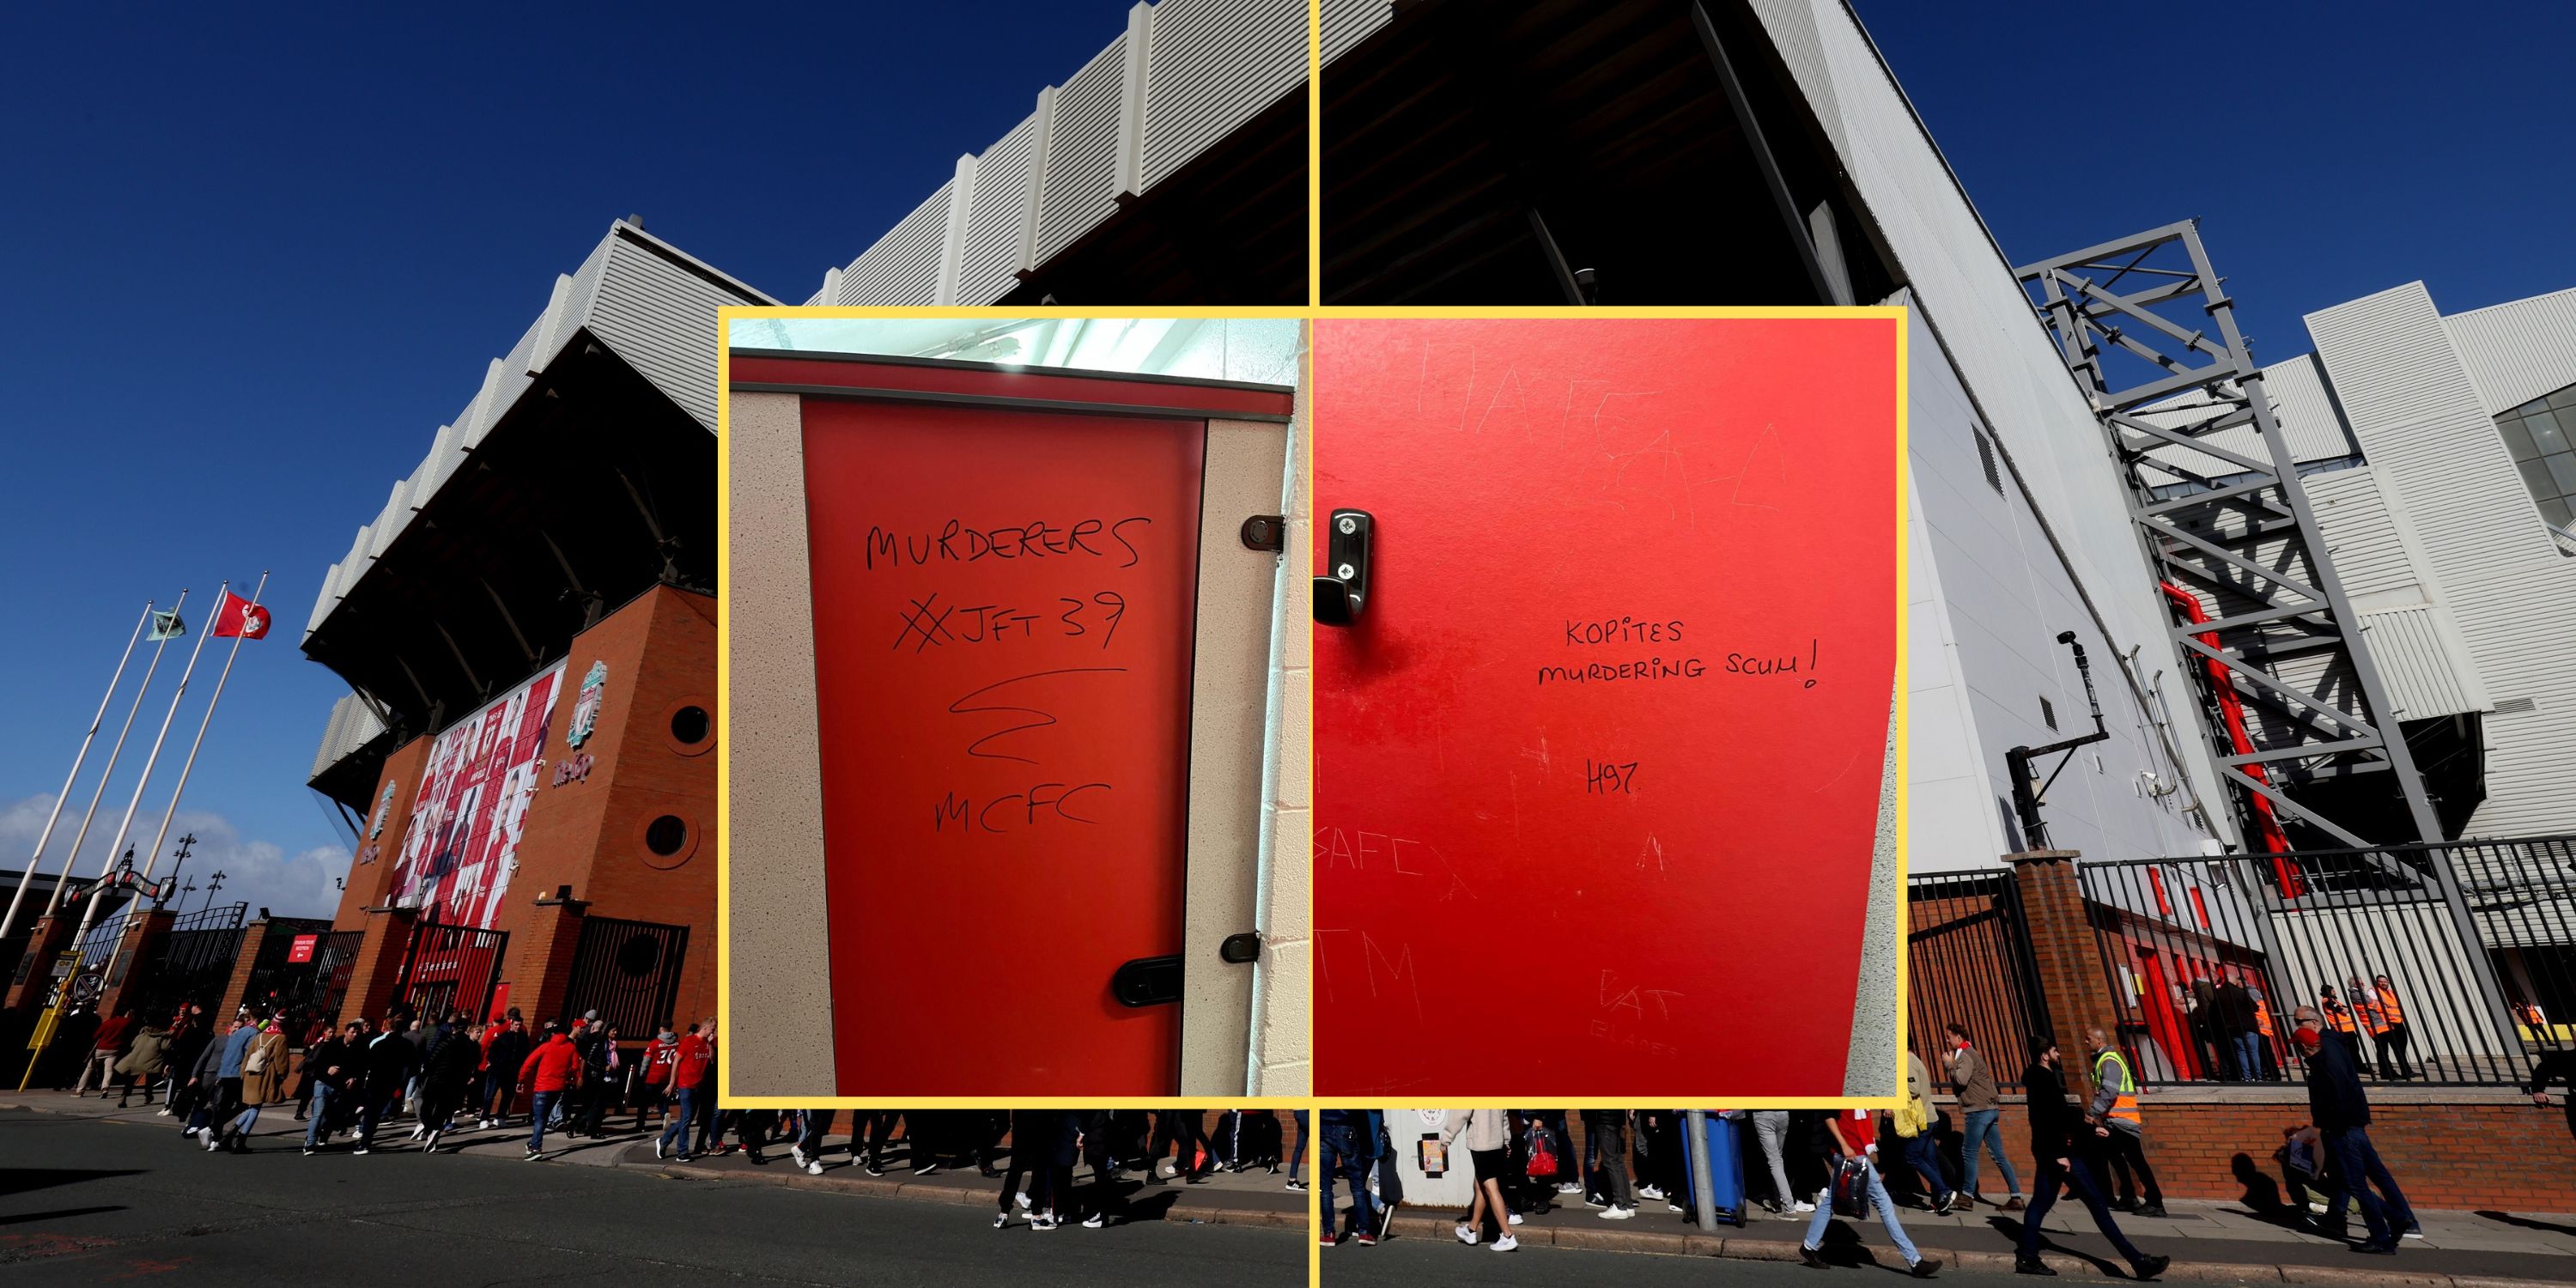 (Photos) ‘Murdering scum’ – Horrific messages left by Manchester City fans at Anfield away end